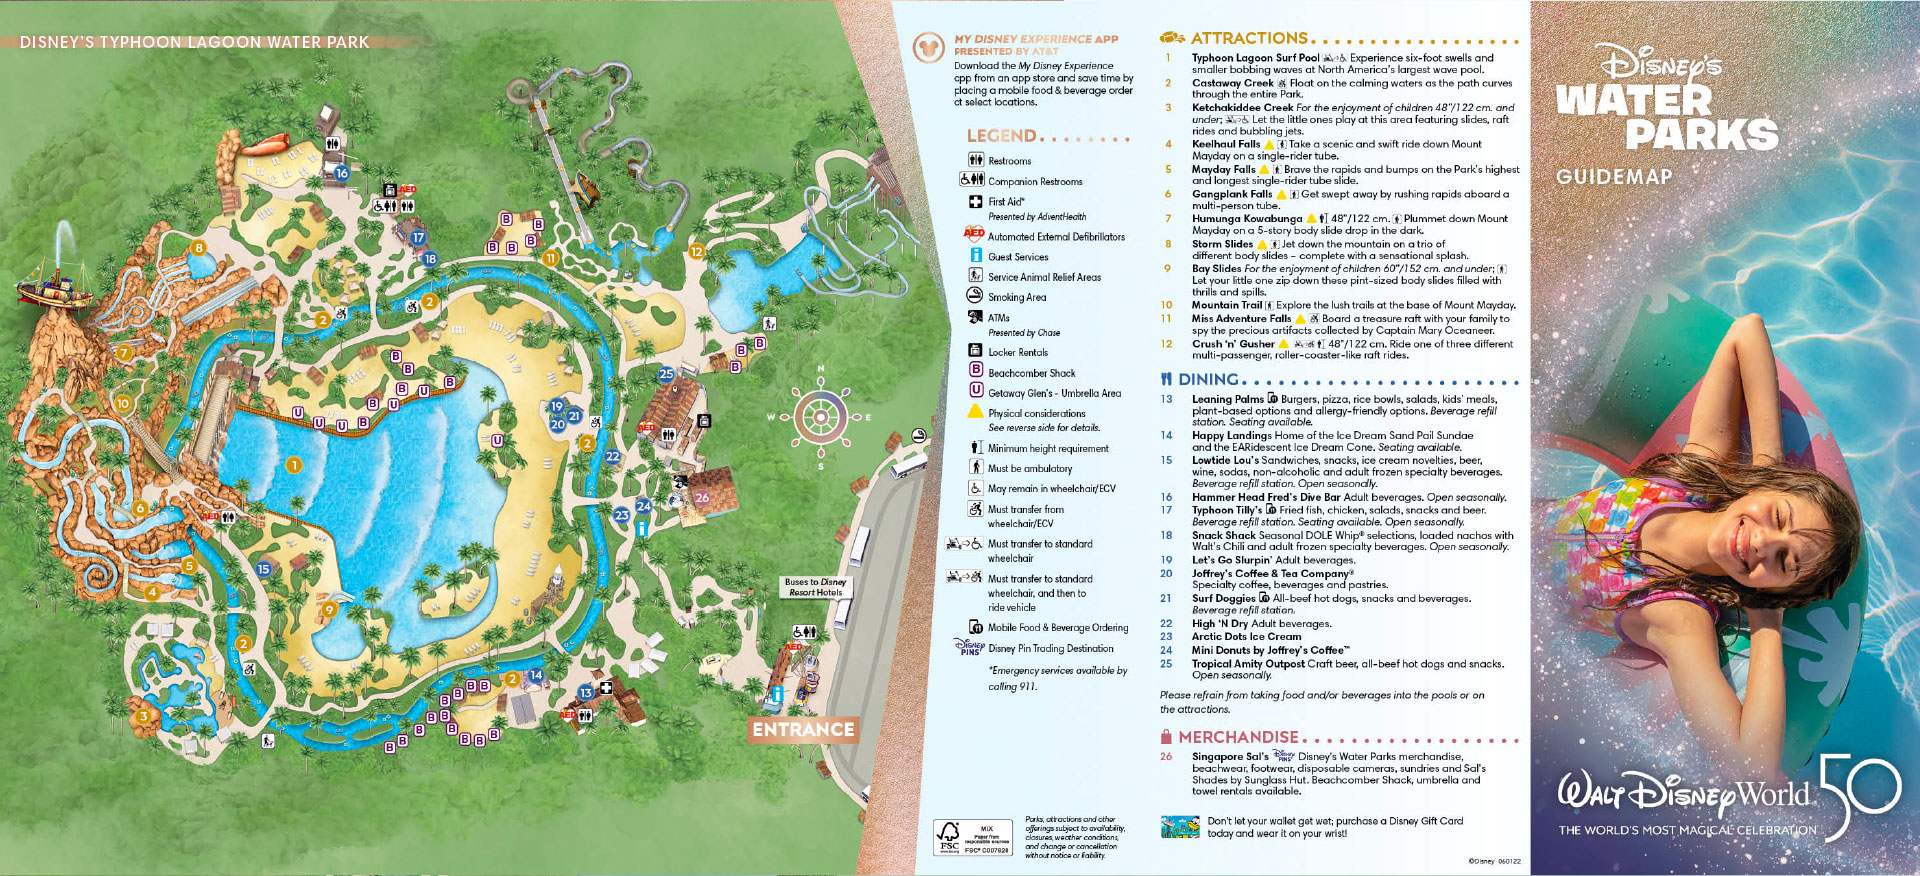 Plan des Water Parks Typhoon Lagoon et Blizzard Beach à Walt Disney World